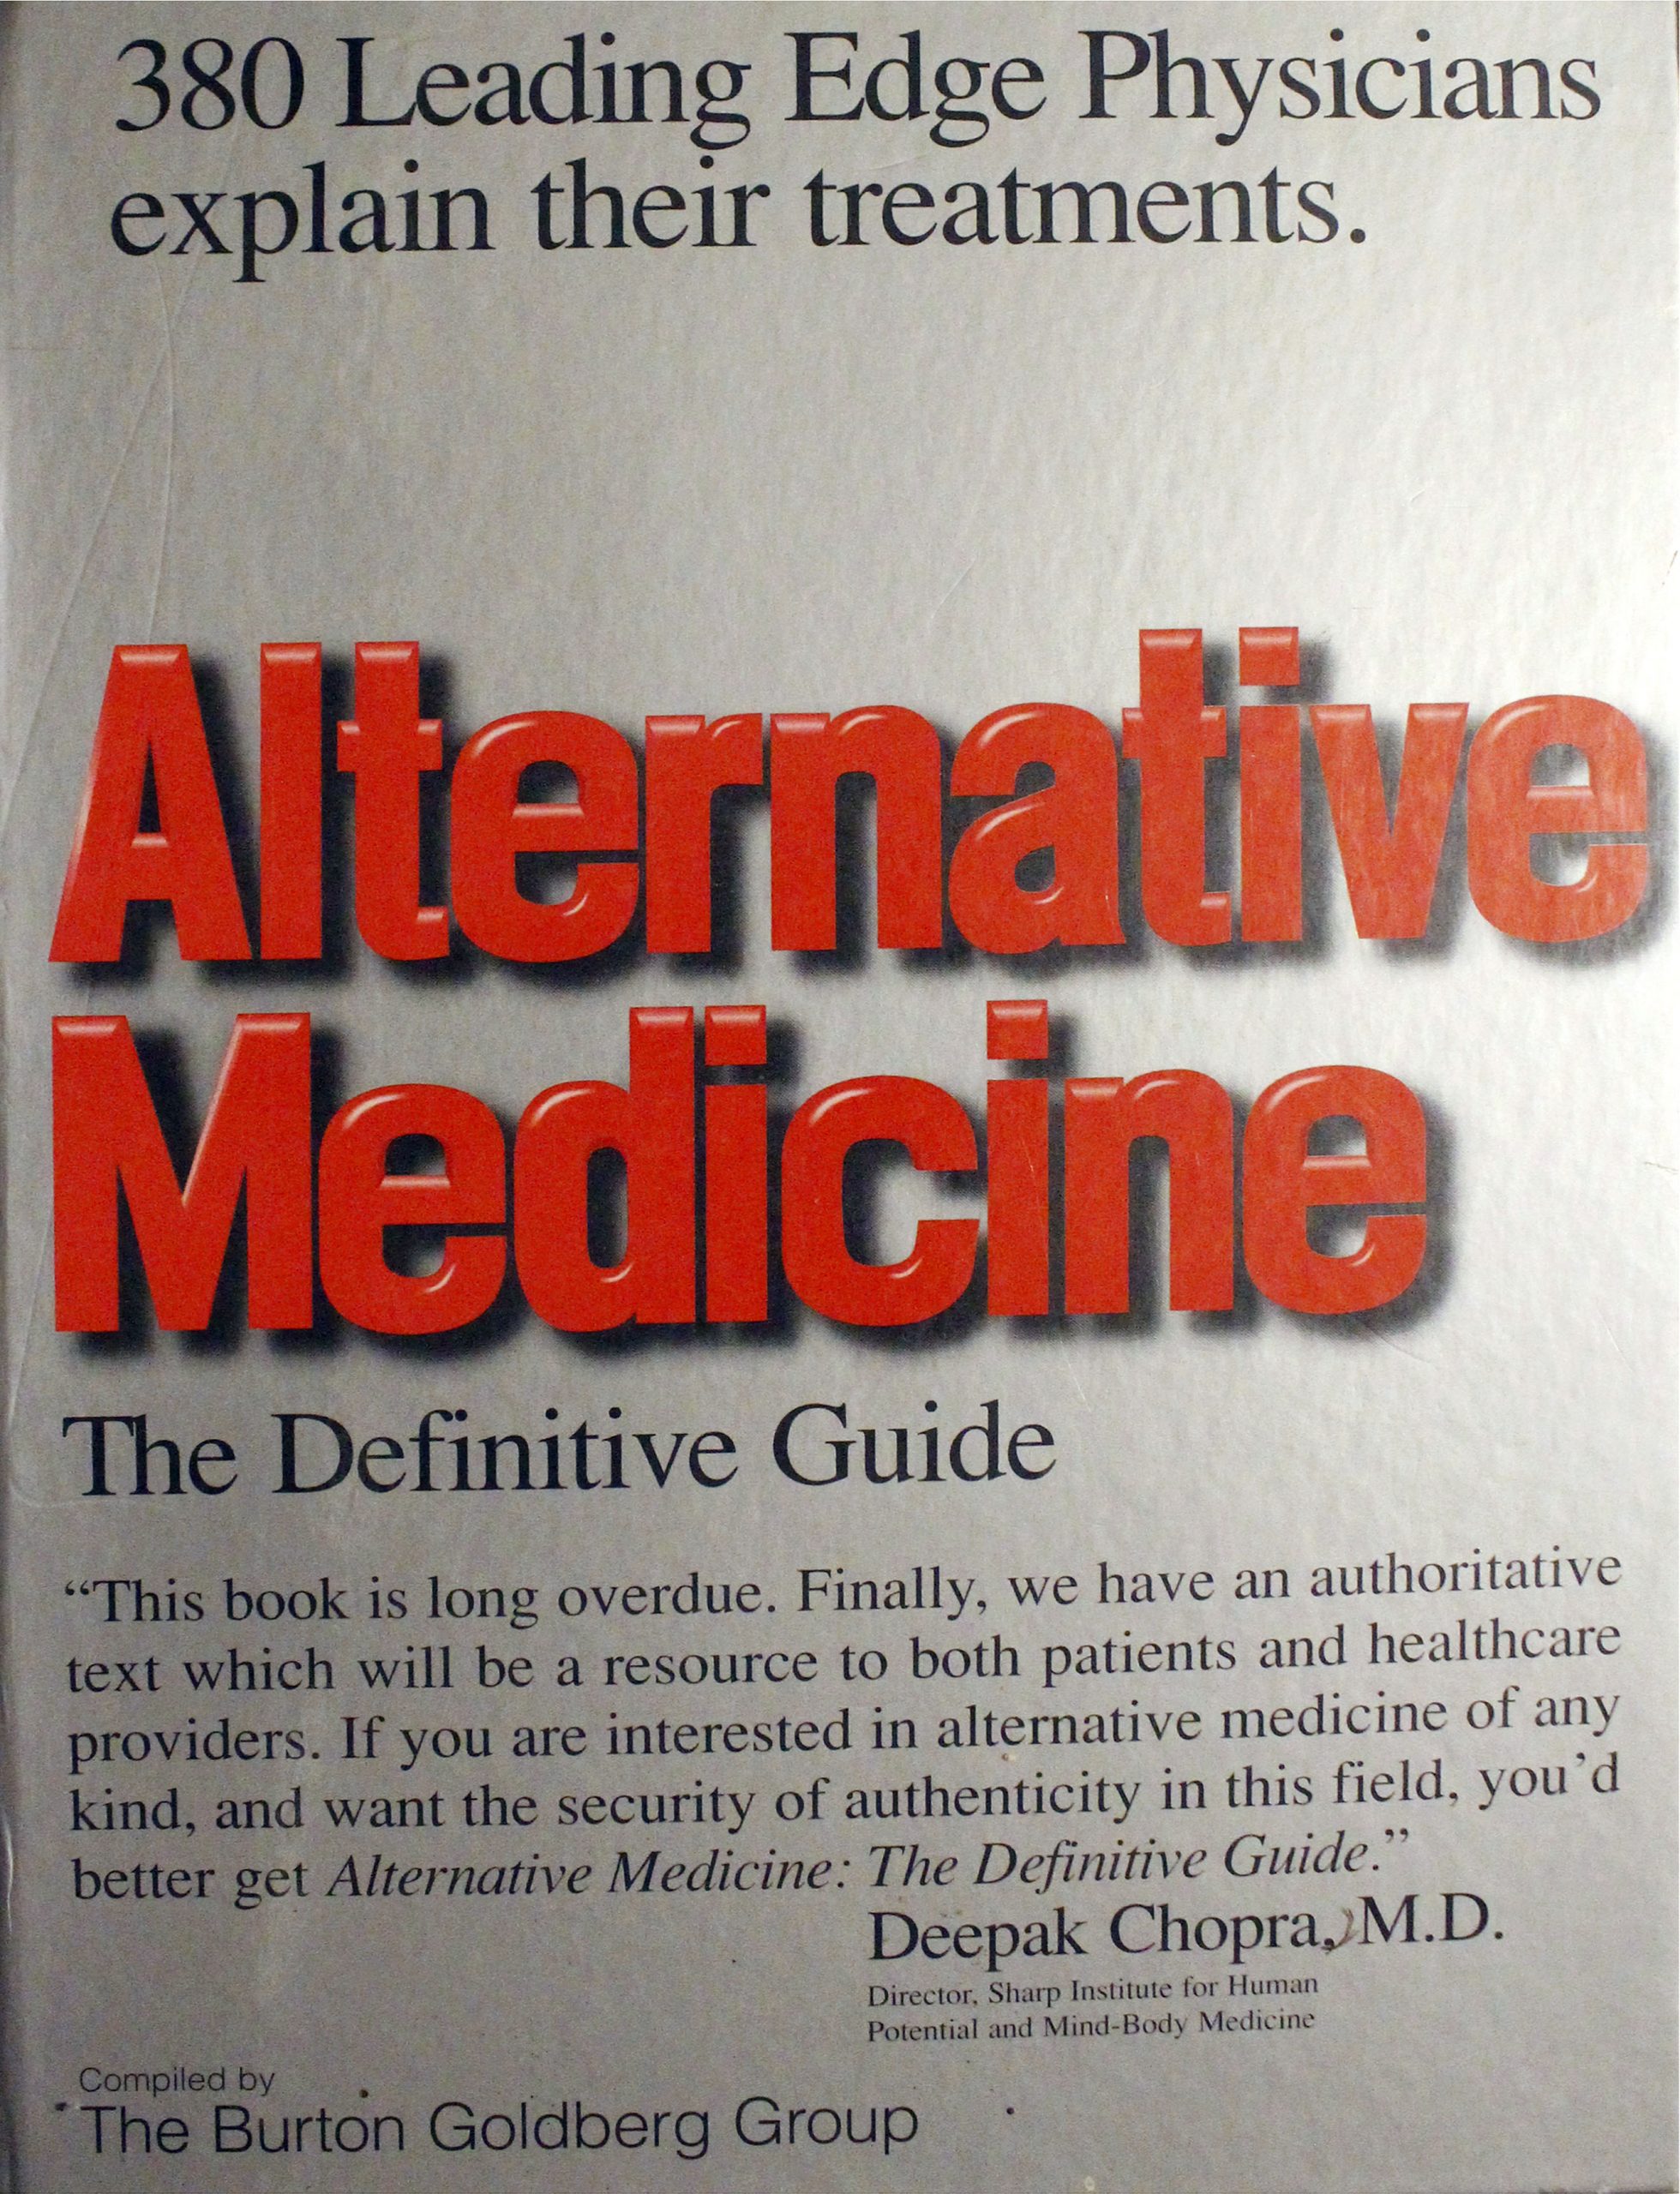 essay on alternative medicine